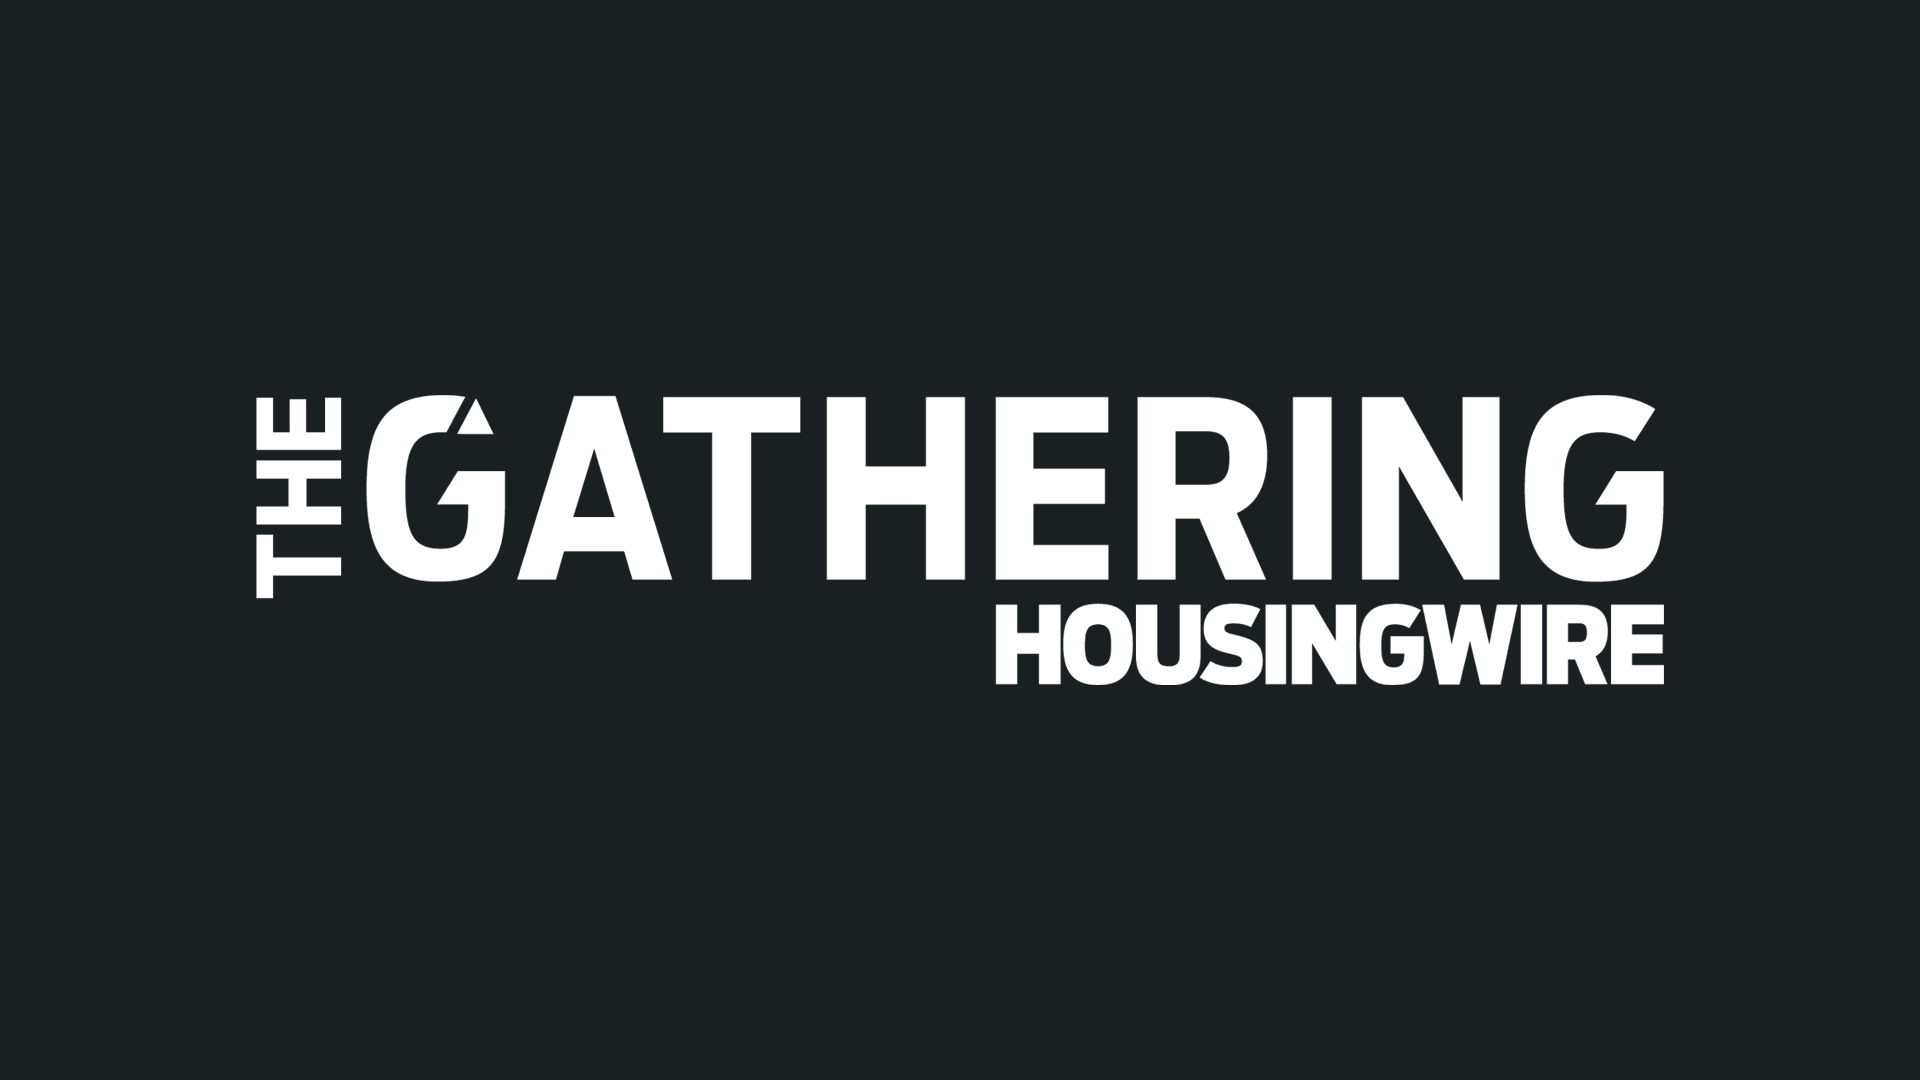 HousingWire: The Gathering